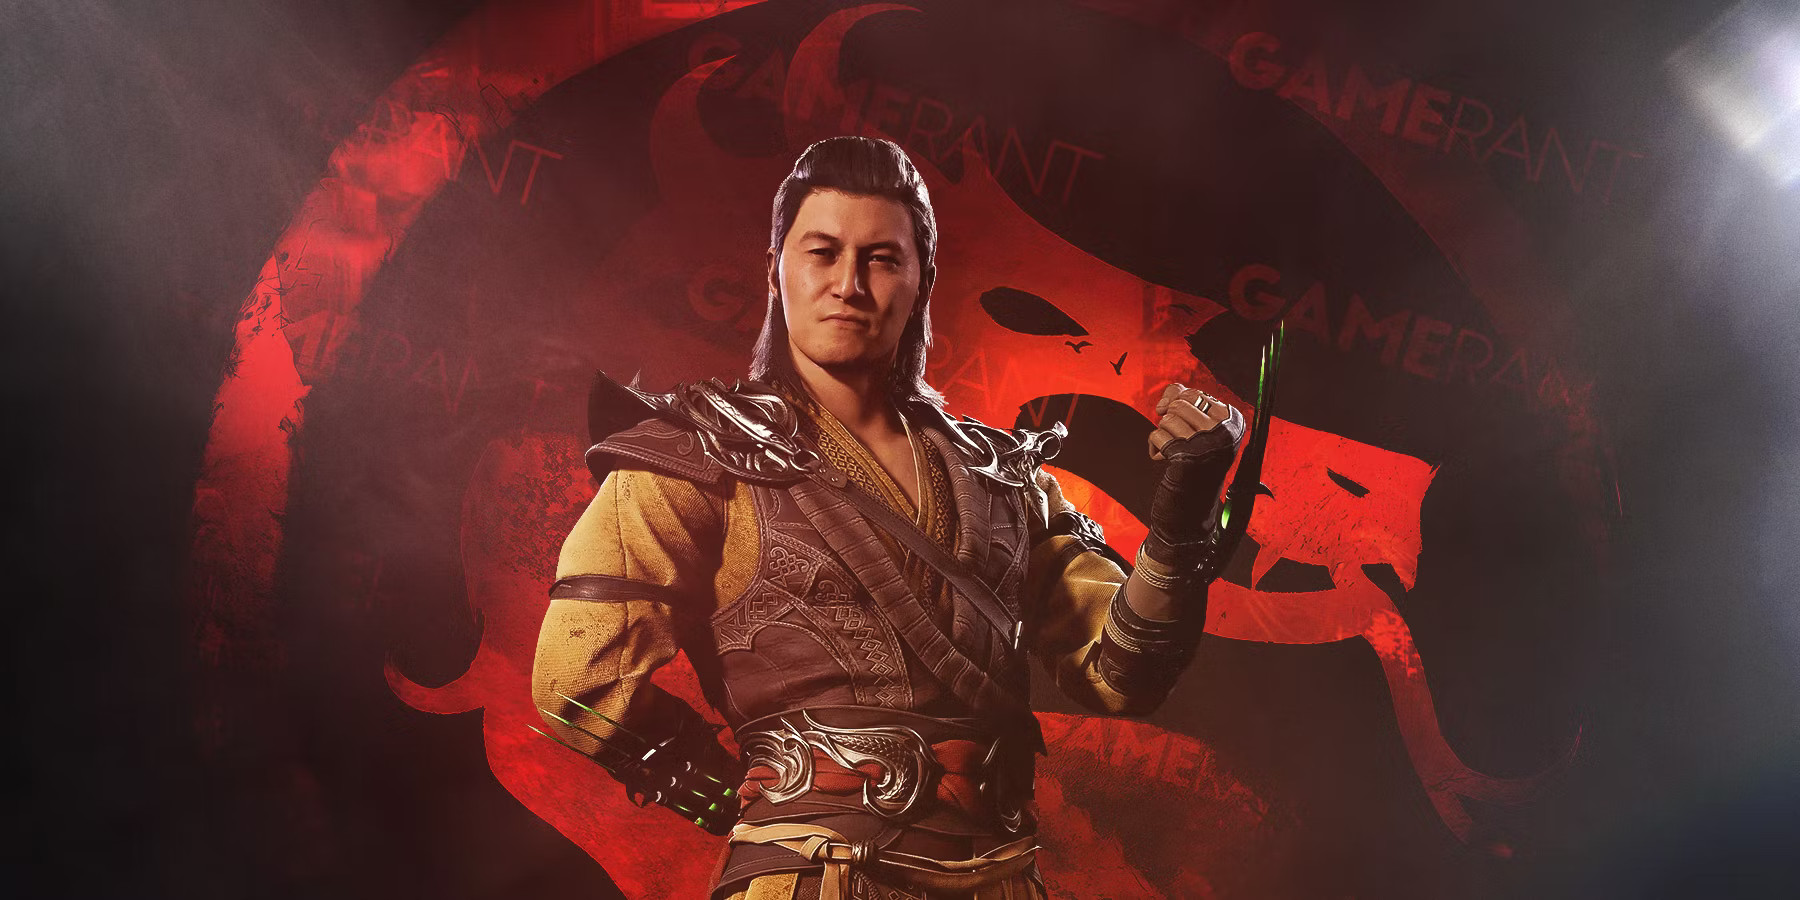 [$ 2.25] Mortal Kombat 1 - Pre-Order Bonus DLC Steam CD Key